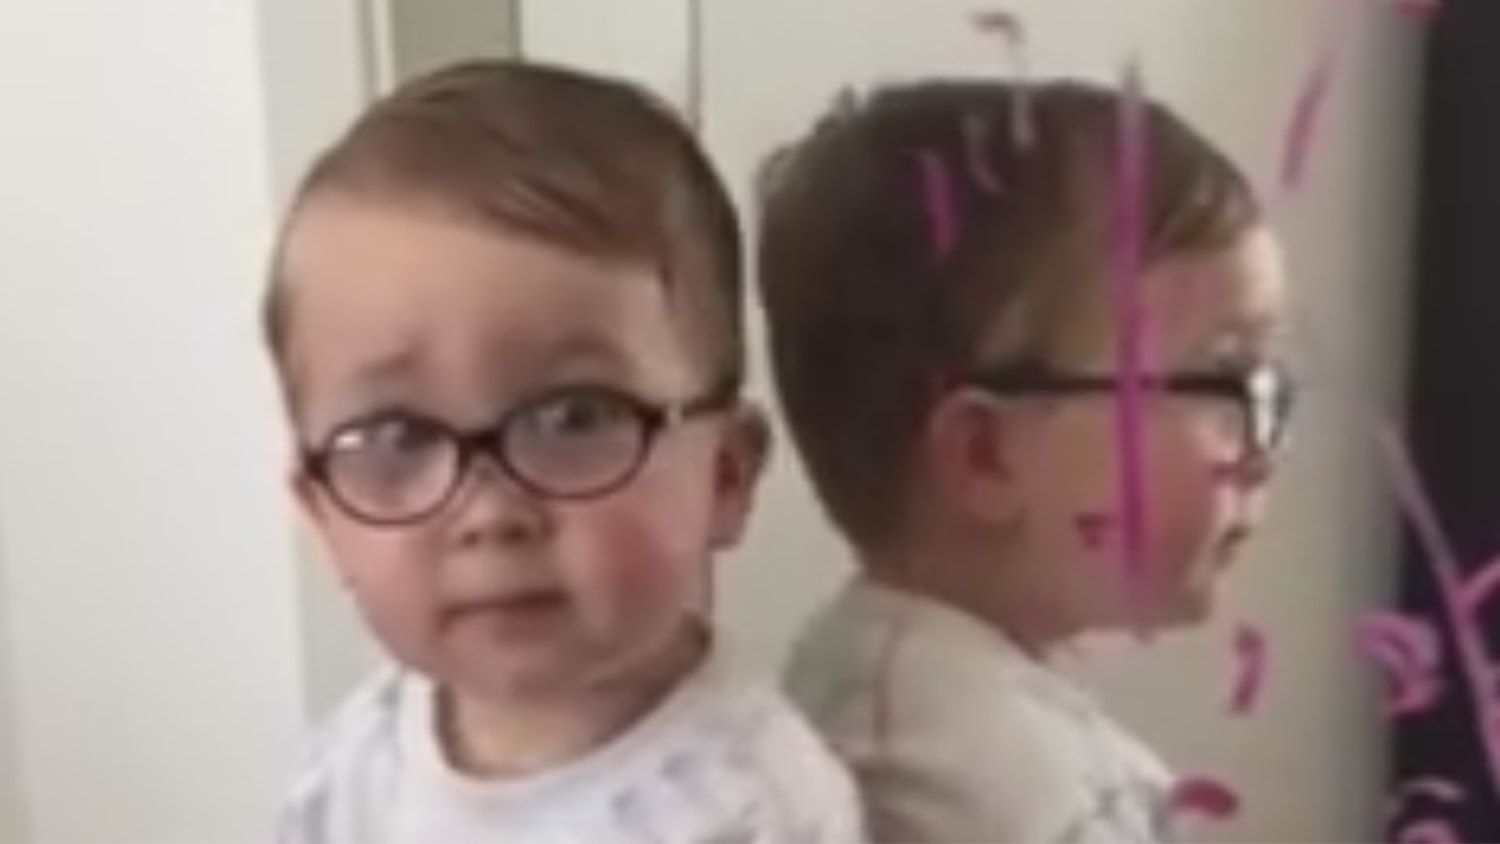 'It was Batman!' Watch this adorable little boy claim superhero drew on  mom's mirror